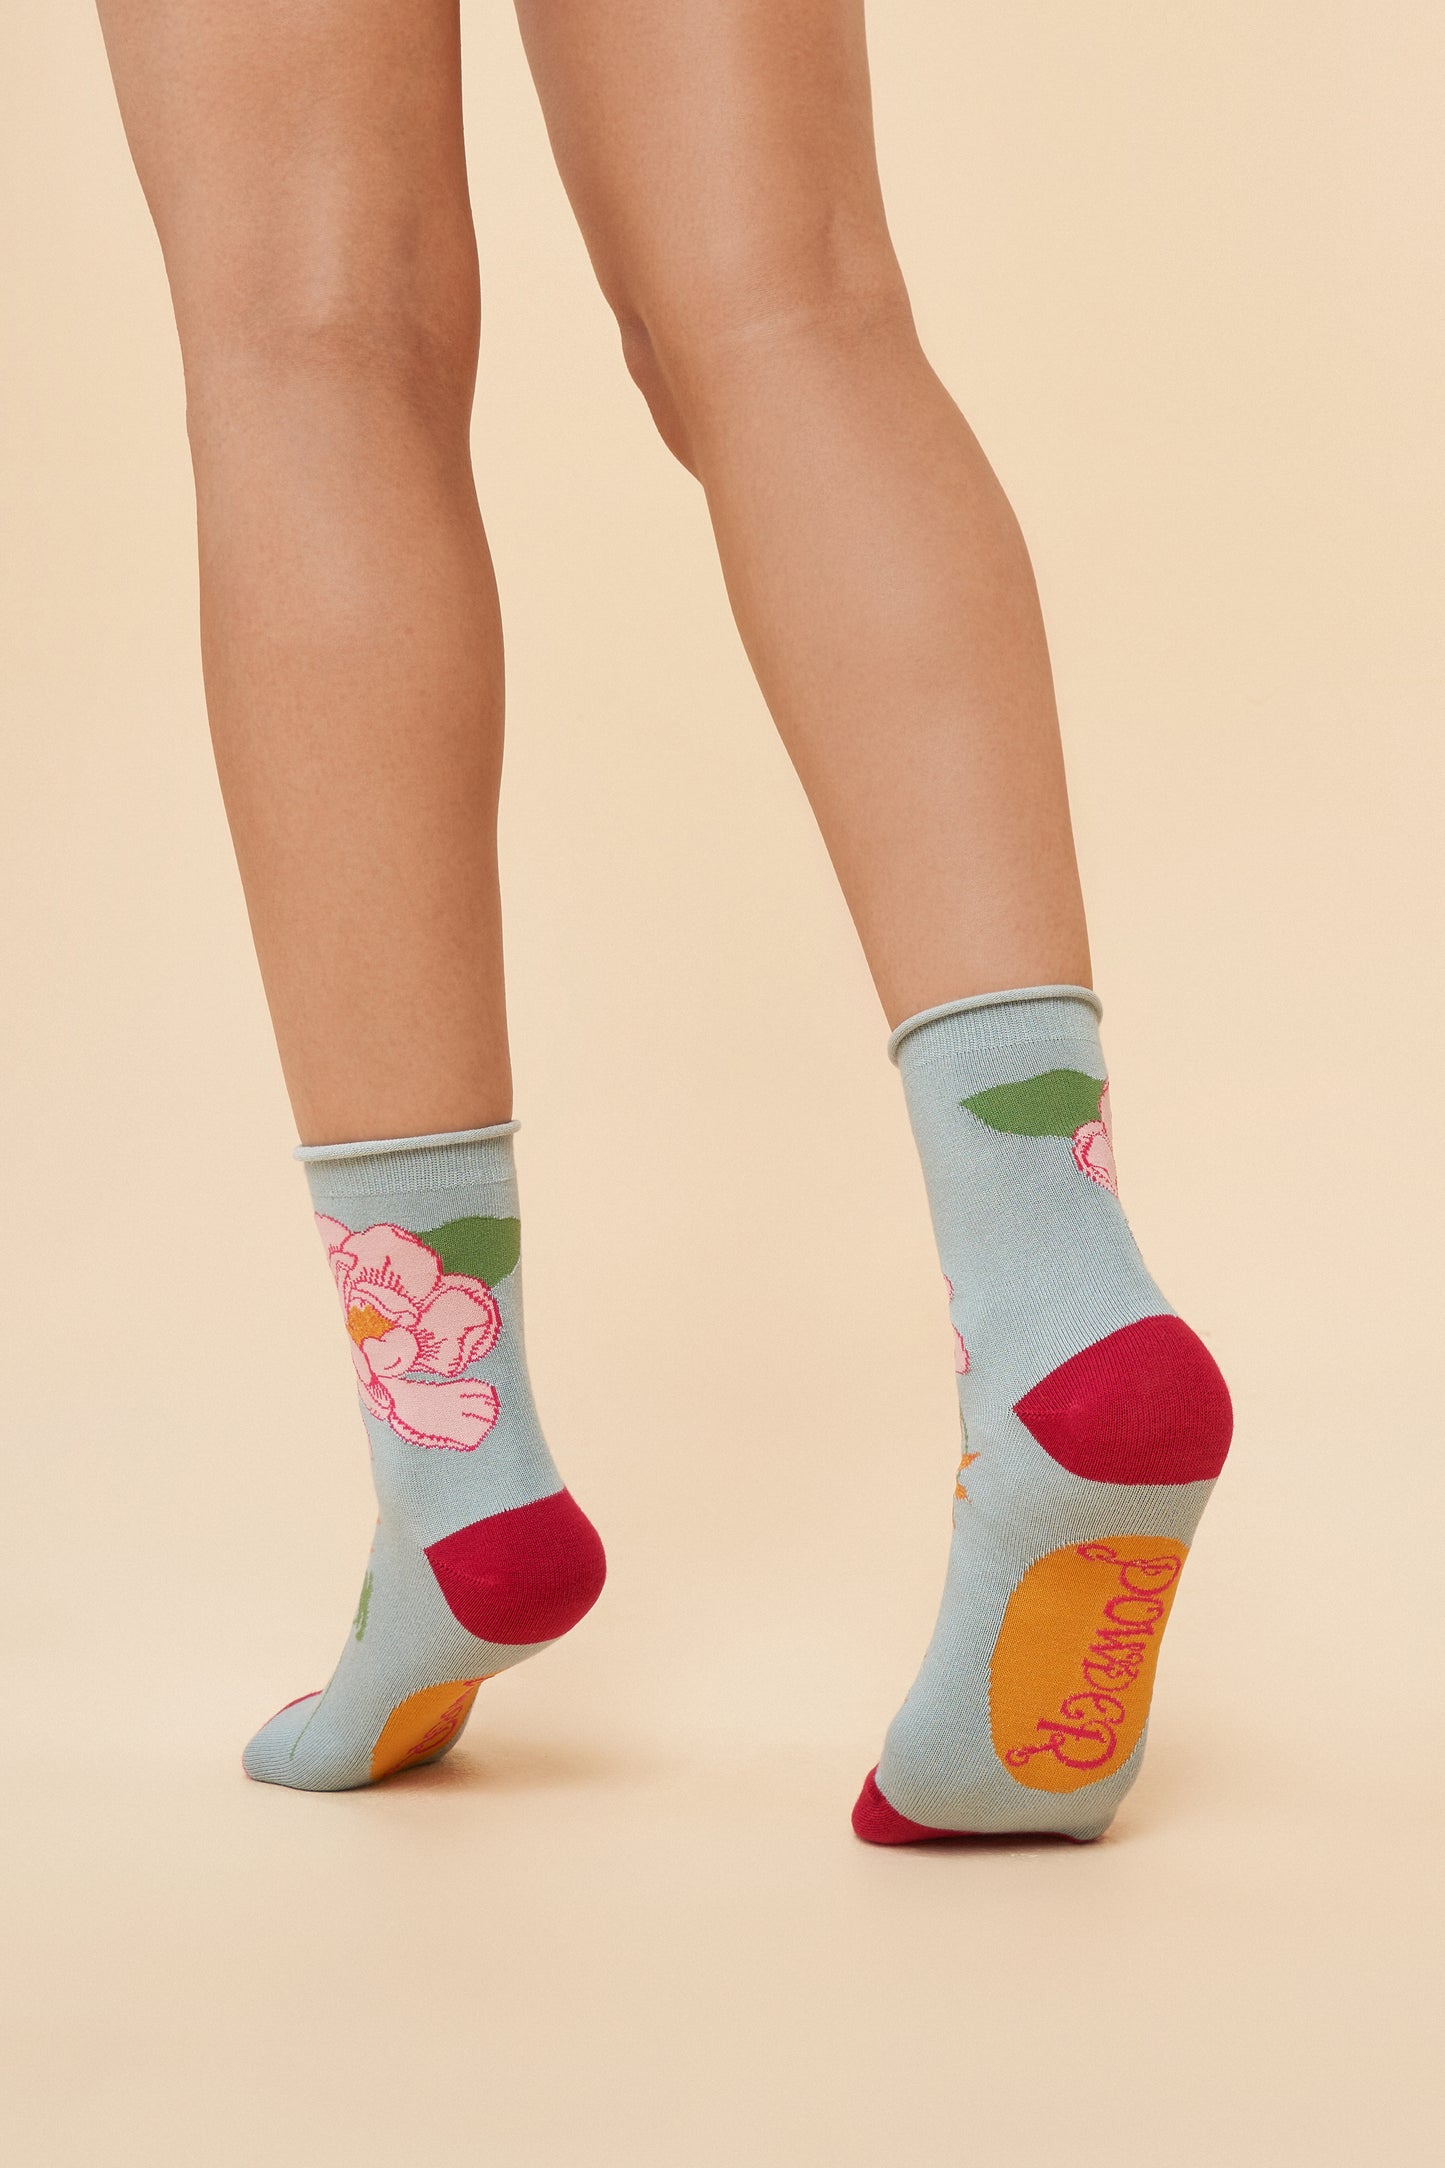 Powder Design Ltd - Accessories  Socks Tropical Flora Ice (2035)